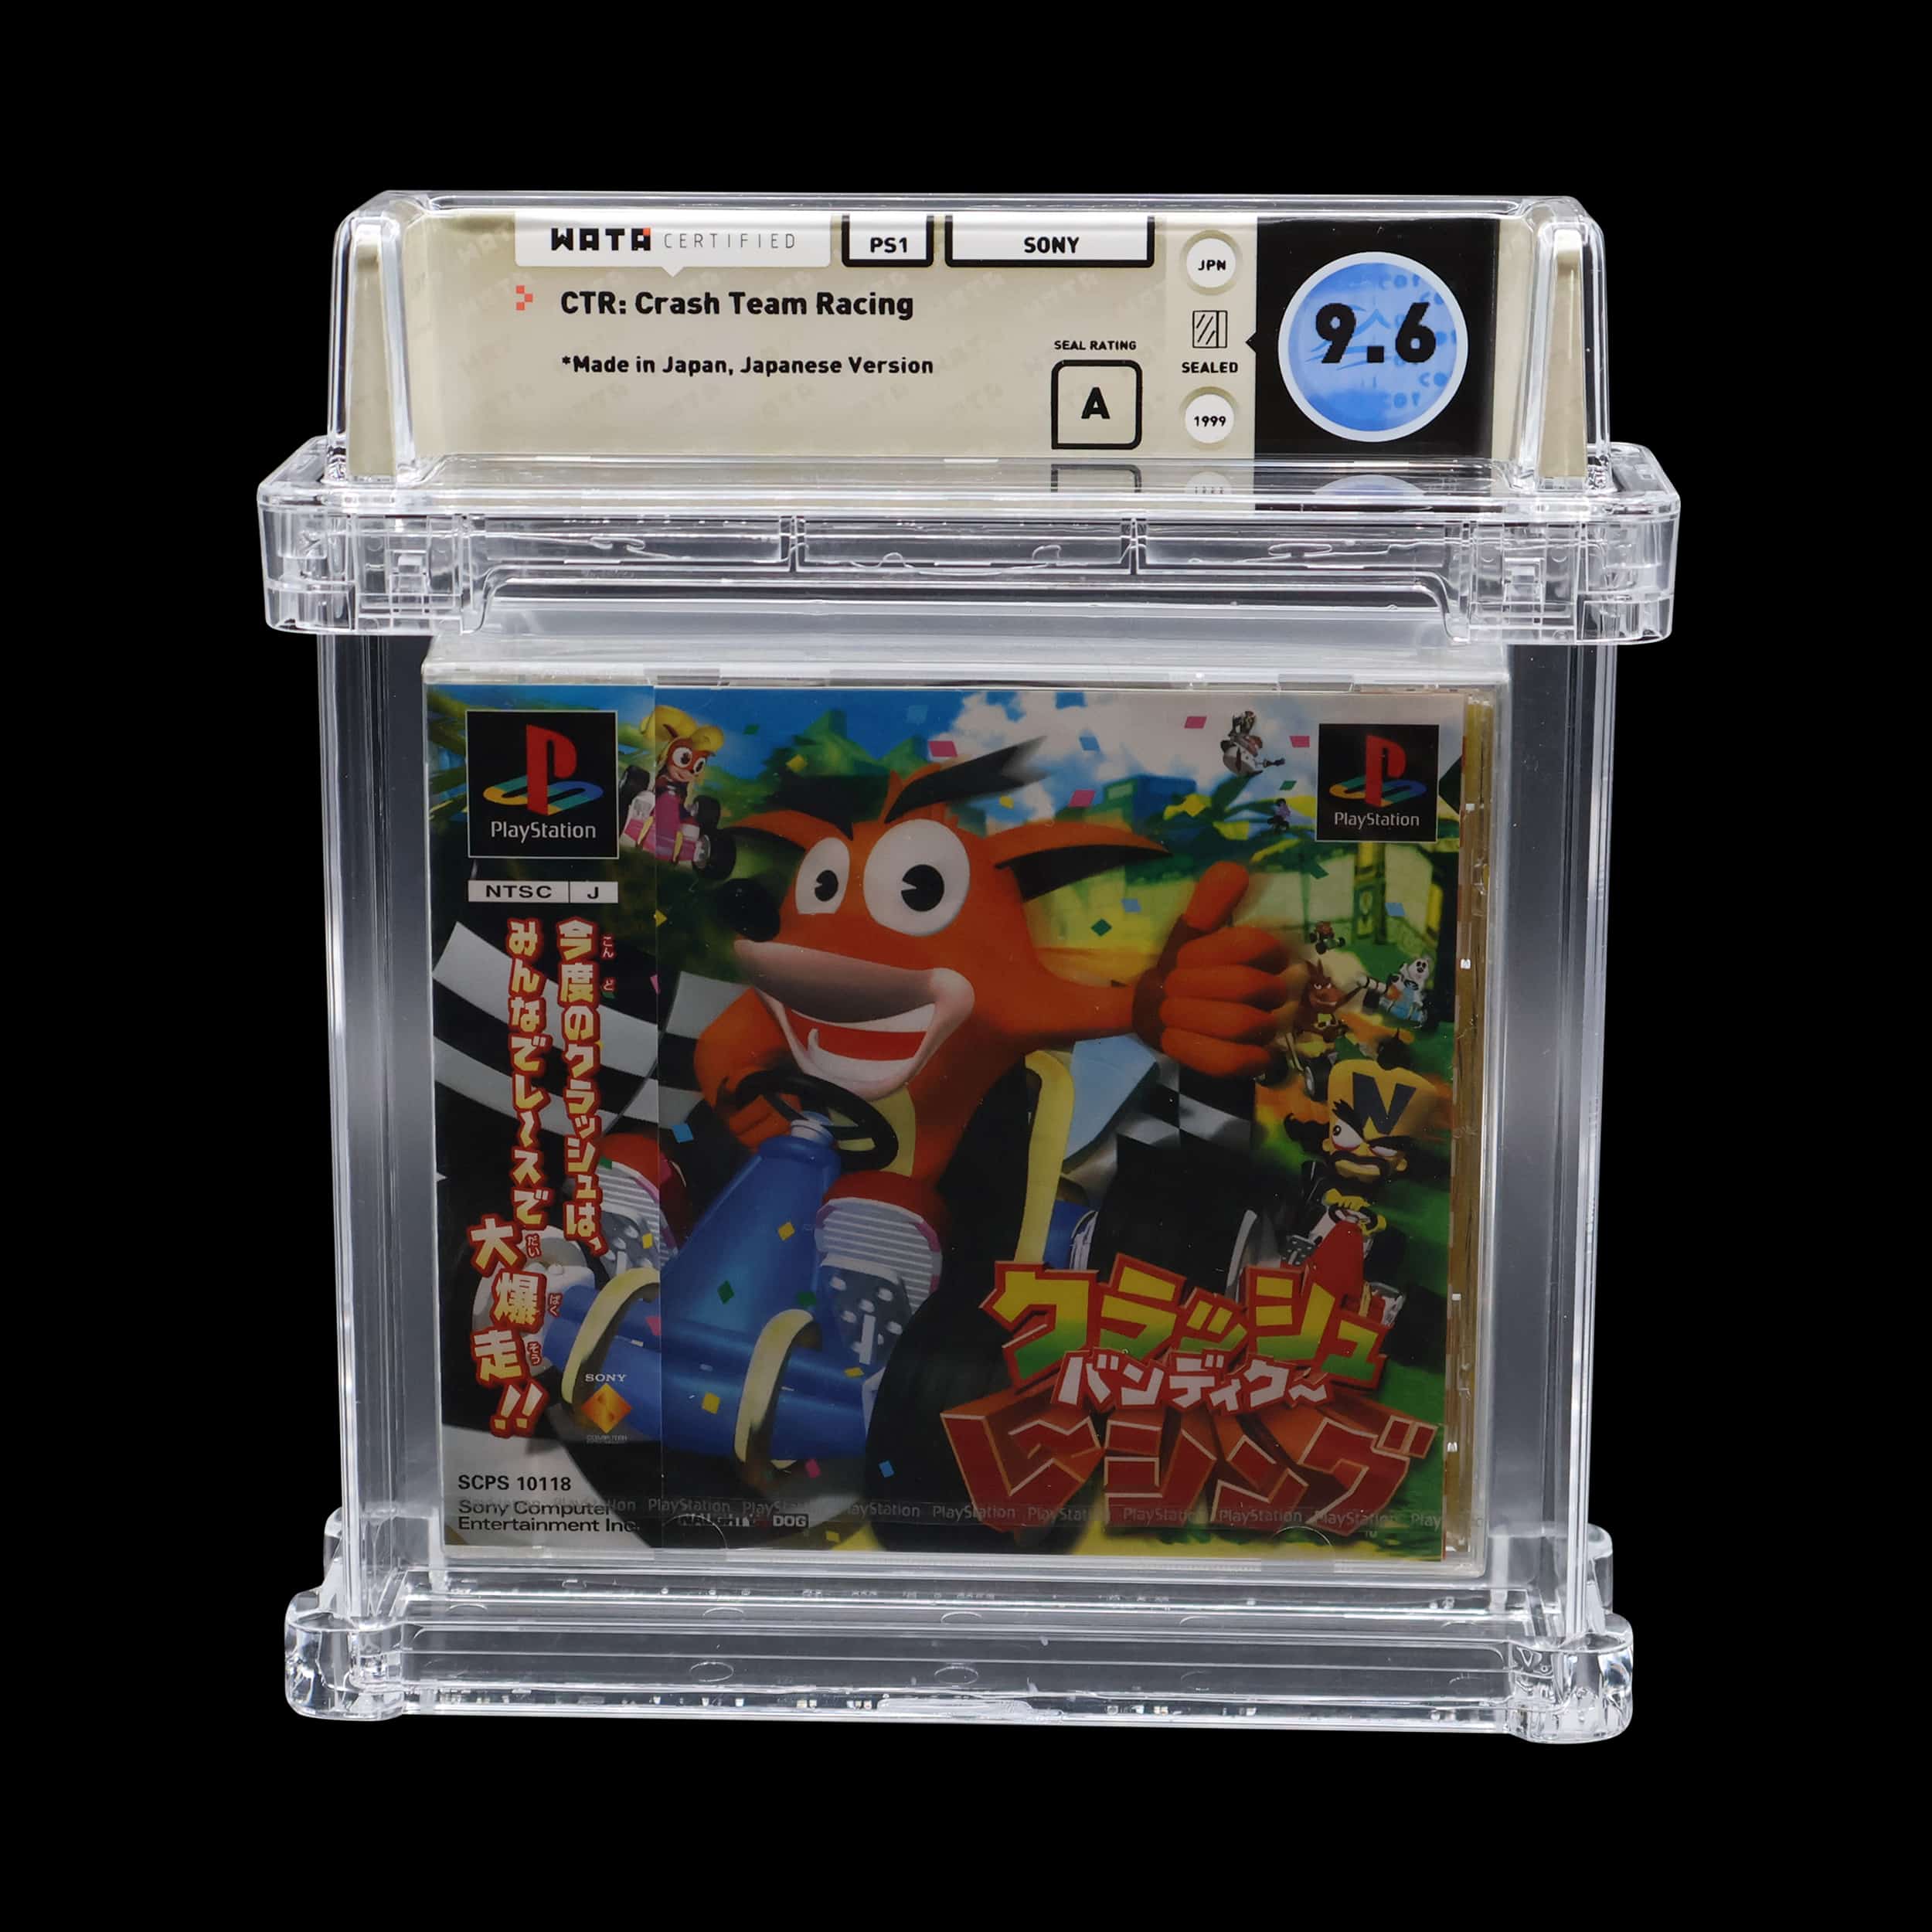 Vintage PlayStation game, CTR Crash Team Racing, rated 9.6 by WATA, in sealed display case.